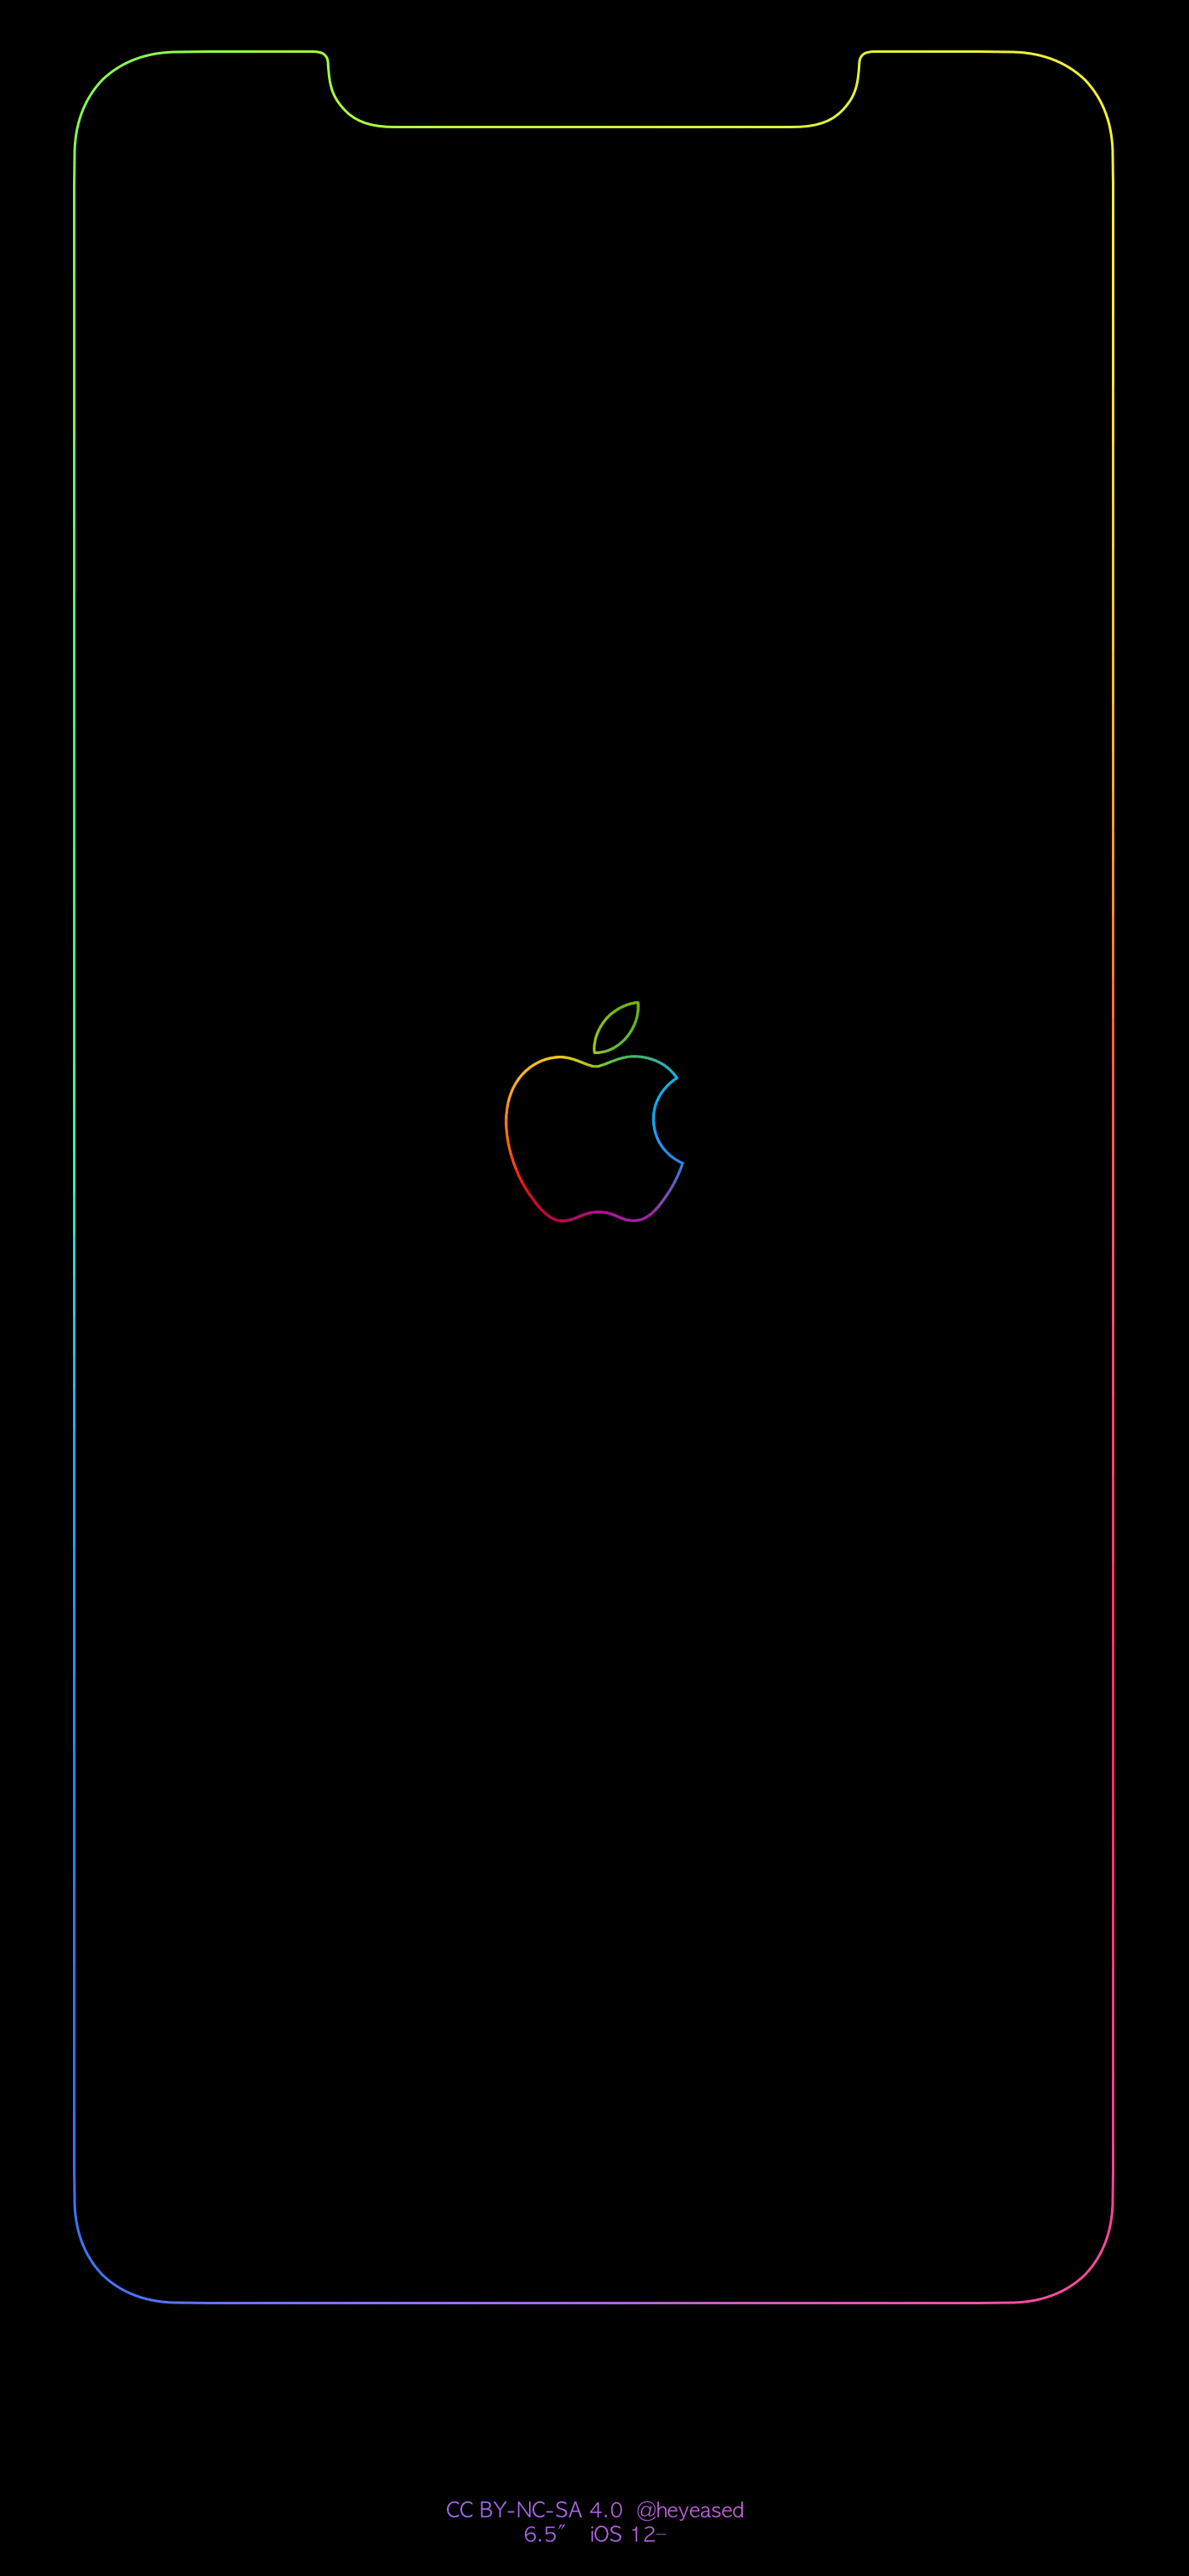 Rainbow border & apple logo iPhone wallpapers Imgur links : r/iphone